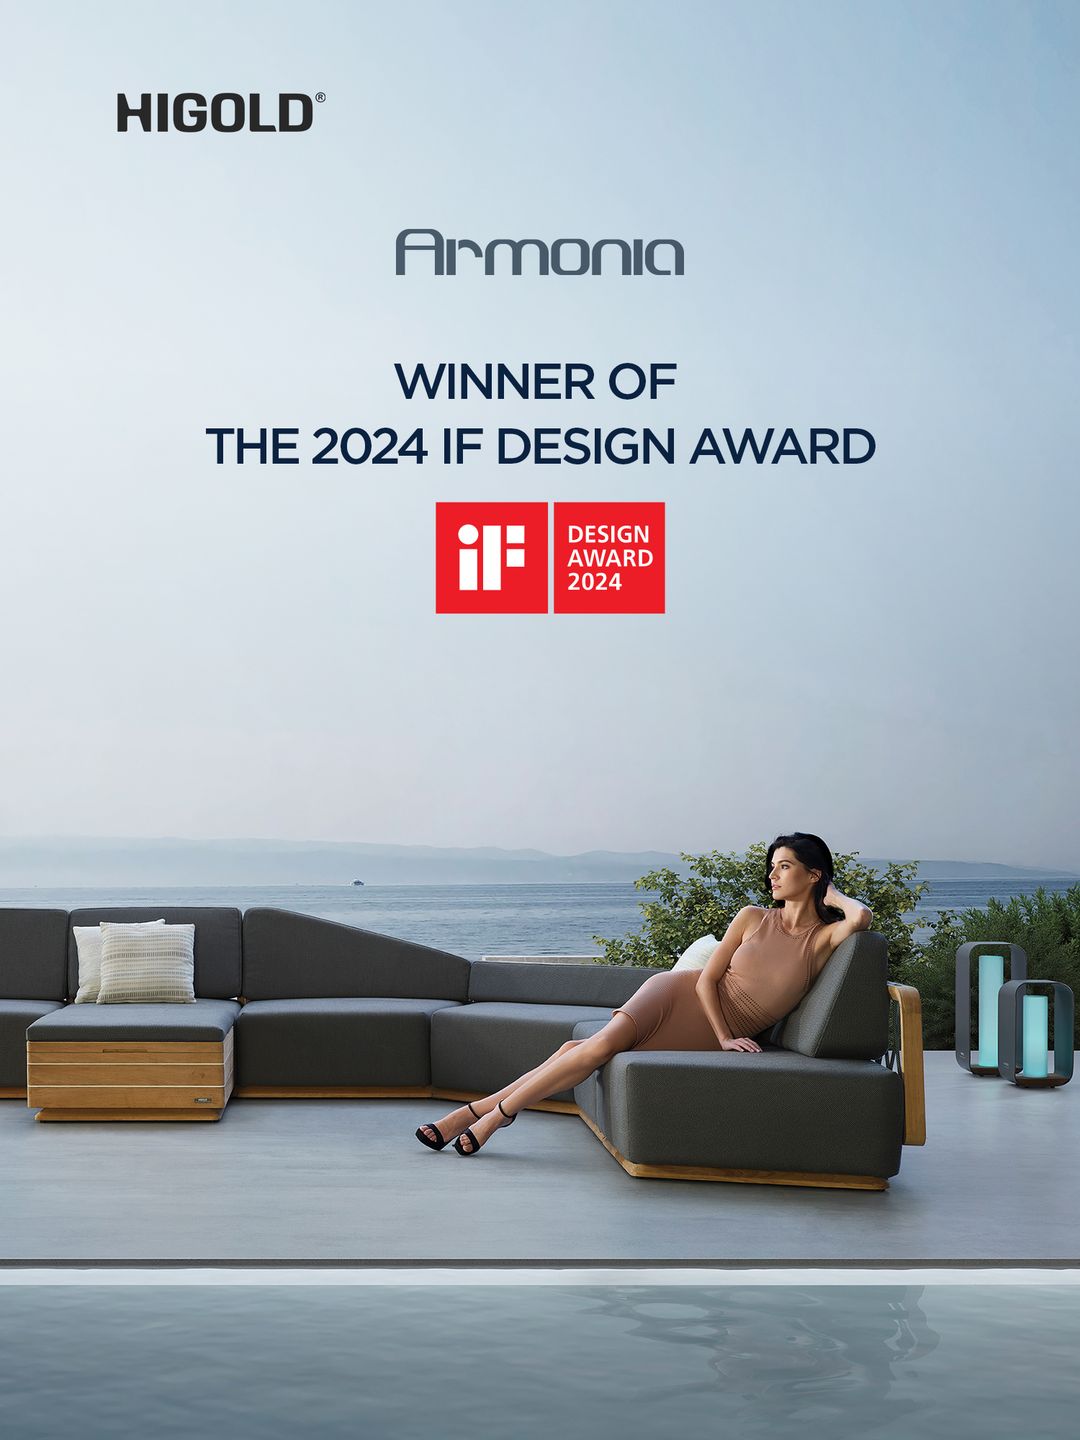 La gamme Arminia de Higold a recu le IF design award 2014